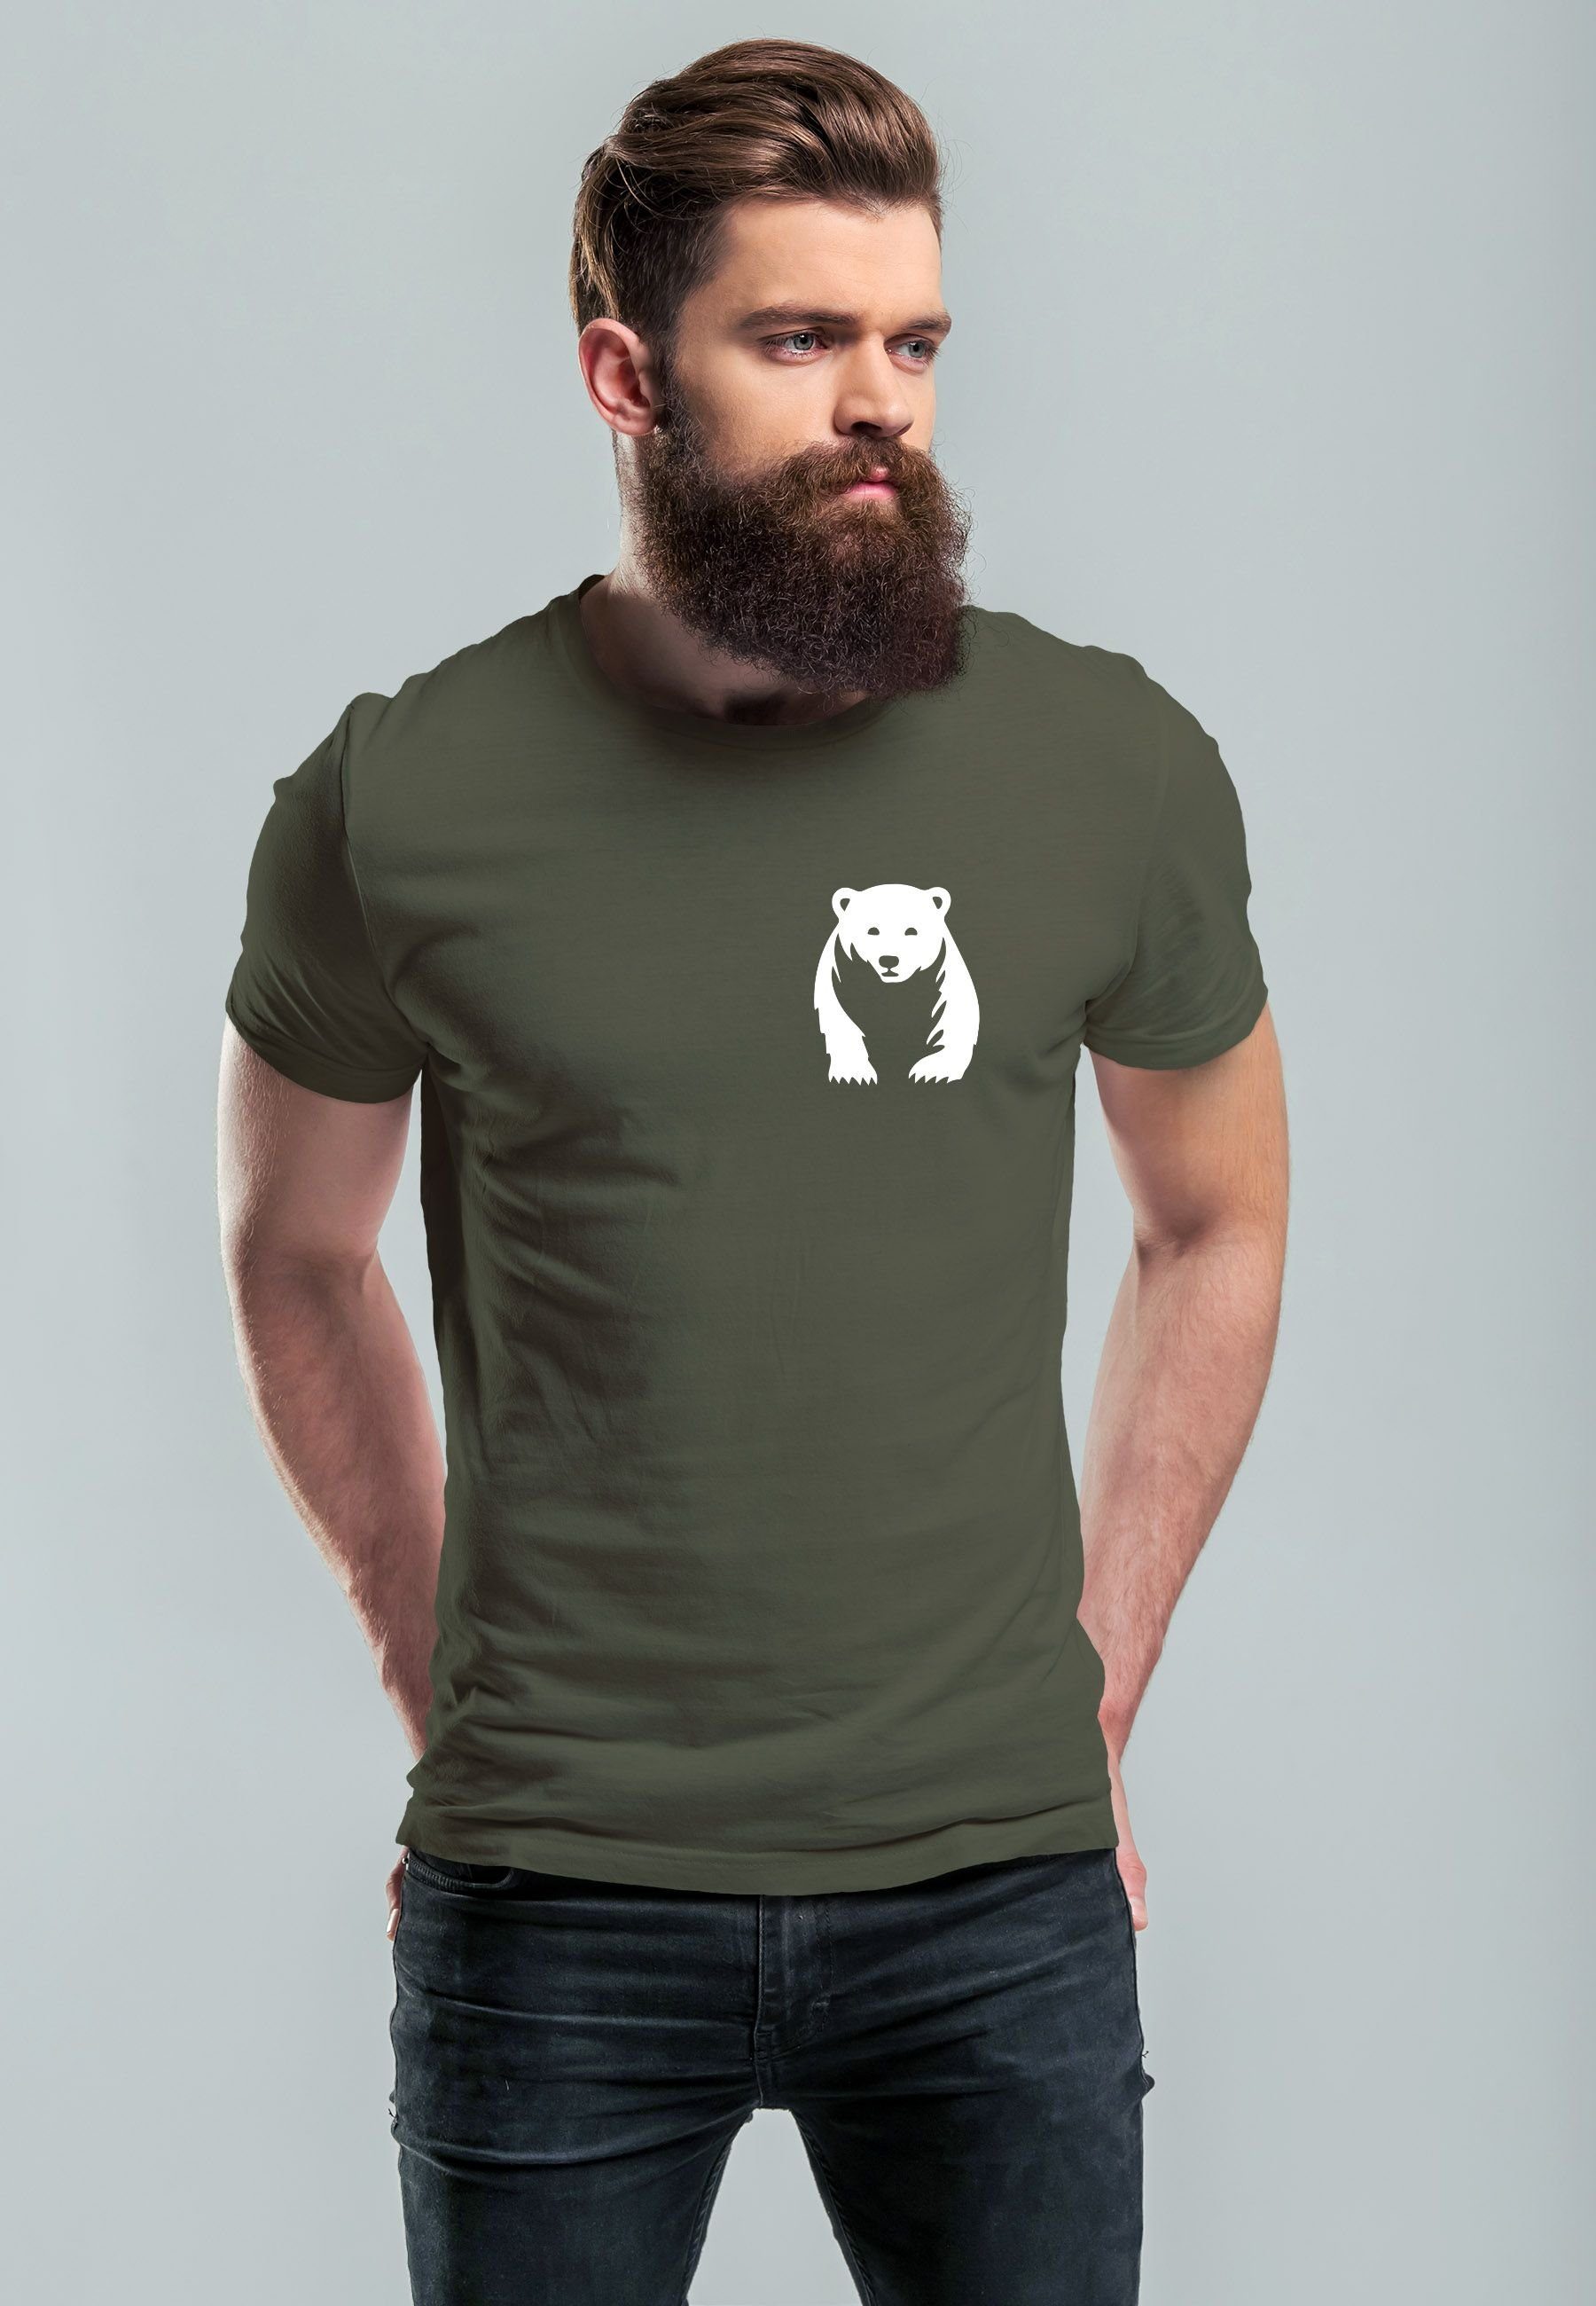 Bär Print T-Shirt Stre mit Print-Shirt Aufdruck Brustprint Outdoor Logo army Fashion Herren Natur Neverless